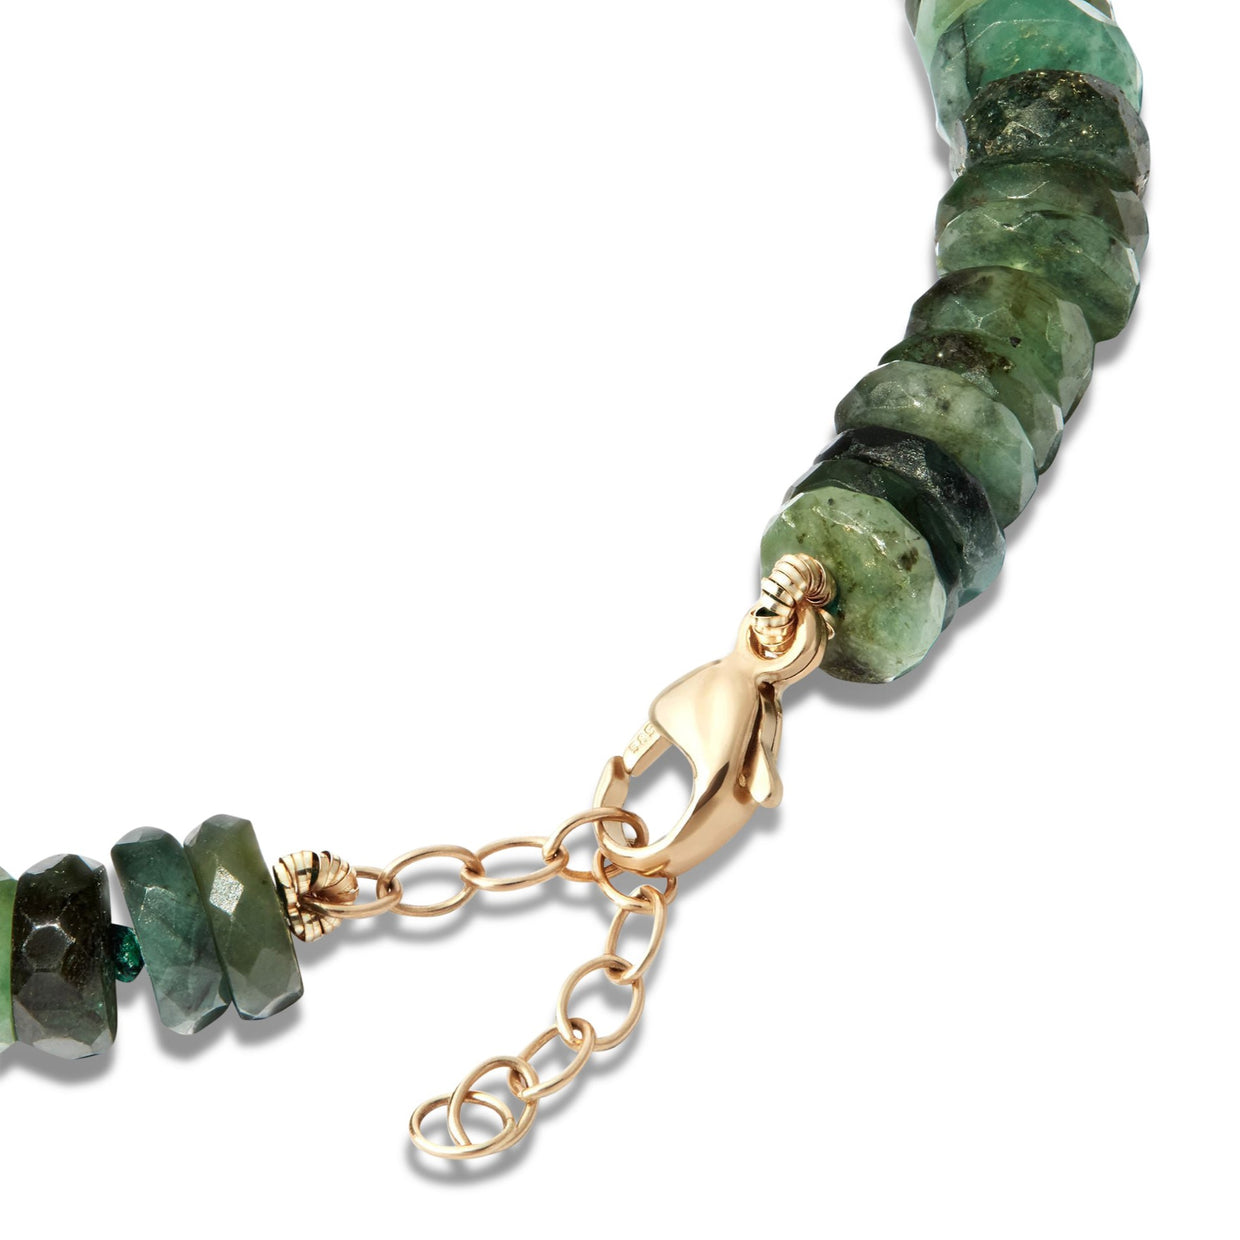 Aurora Emerald Faceted Gemstone Bracelet